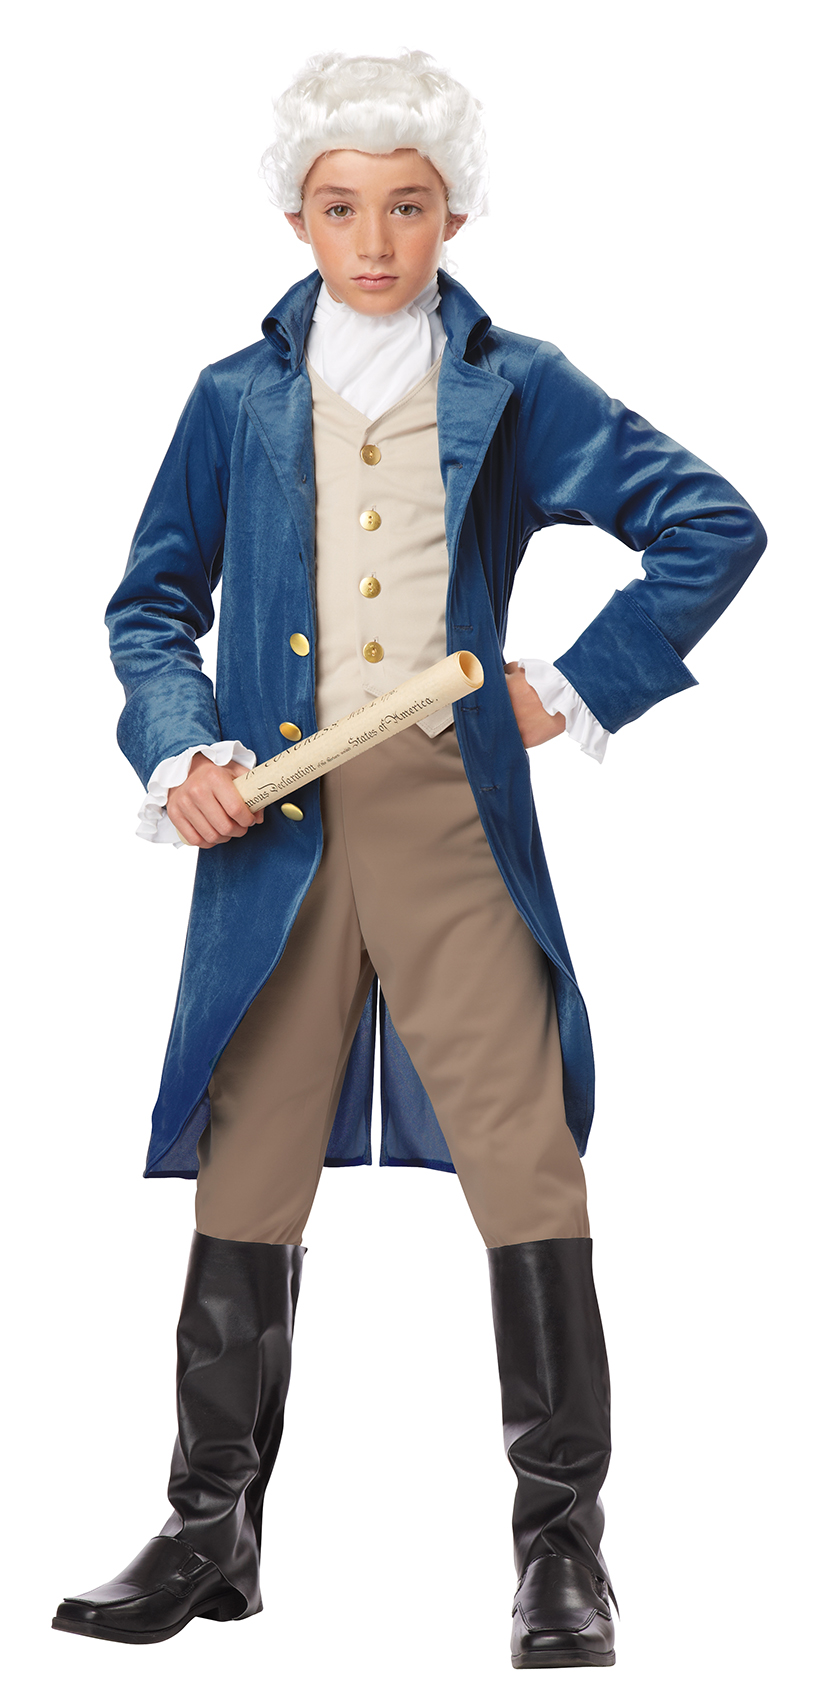 California Costumes Boys George Washington Halloween Costume, Blue, Large